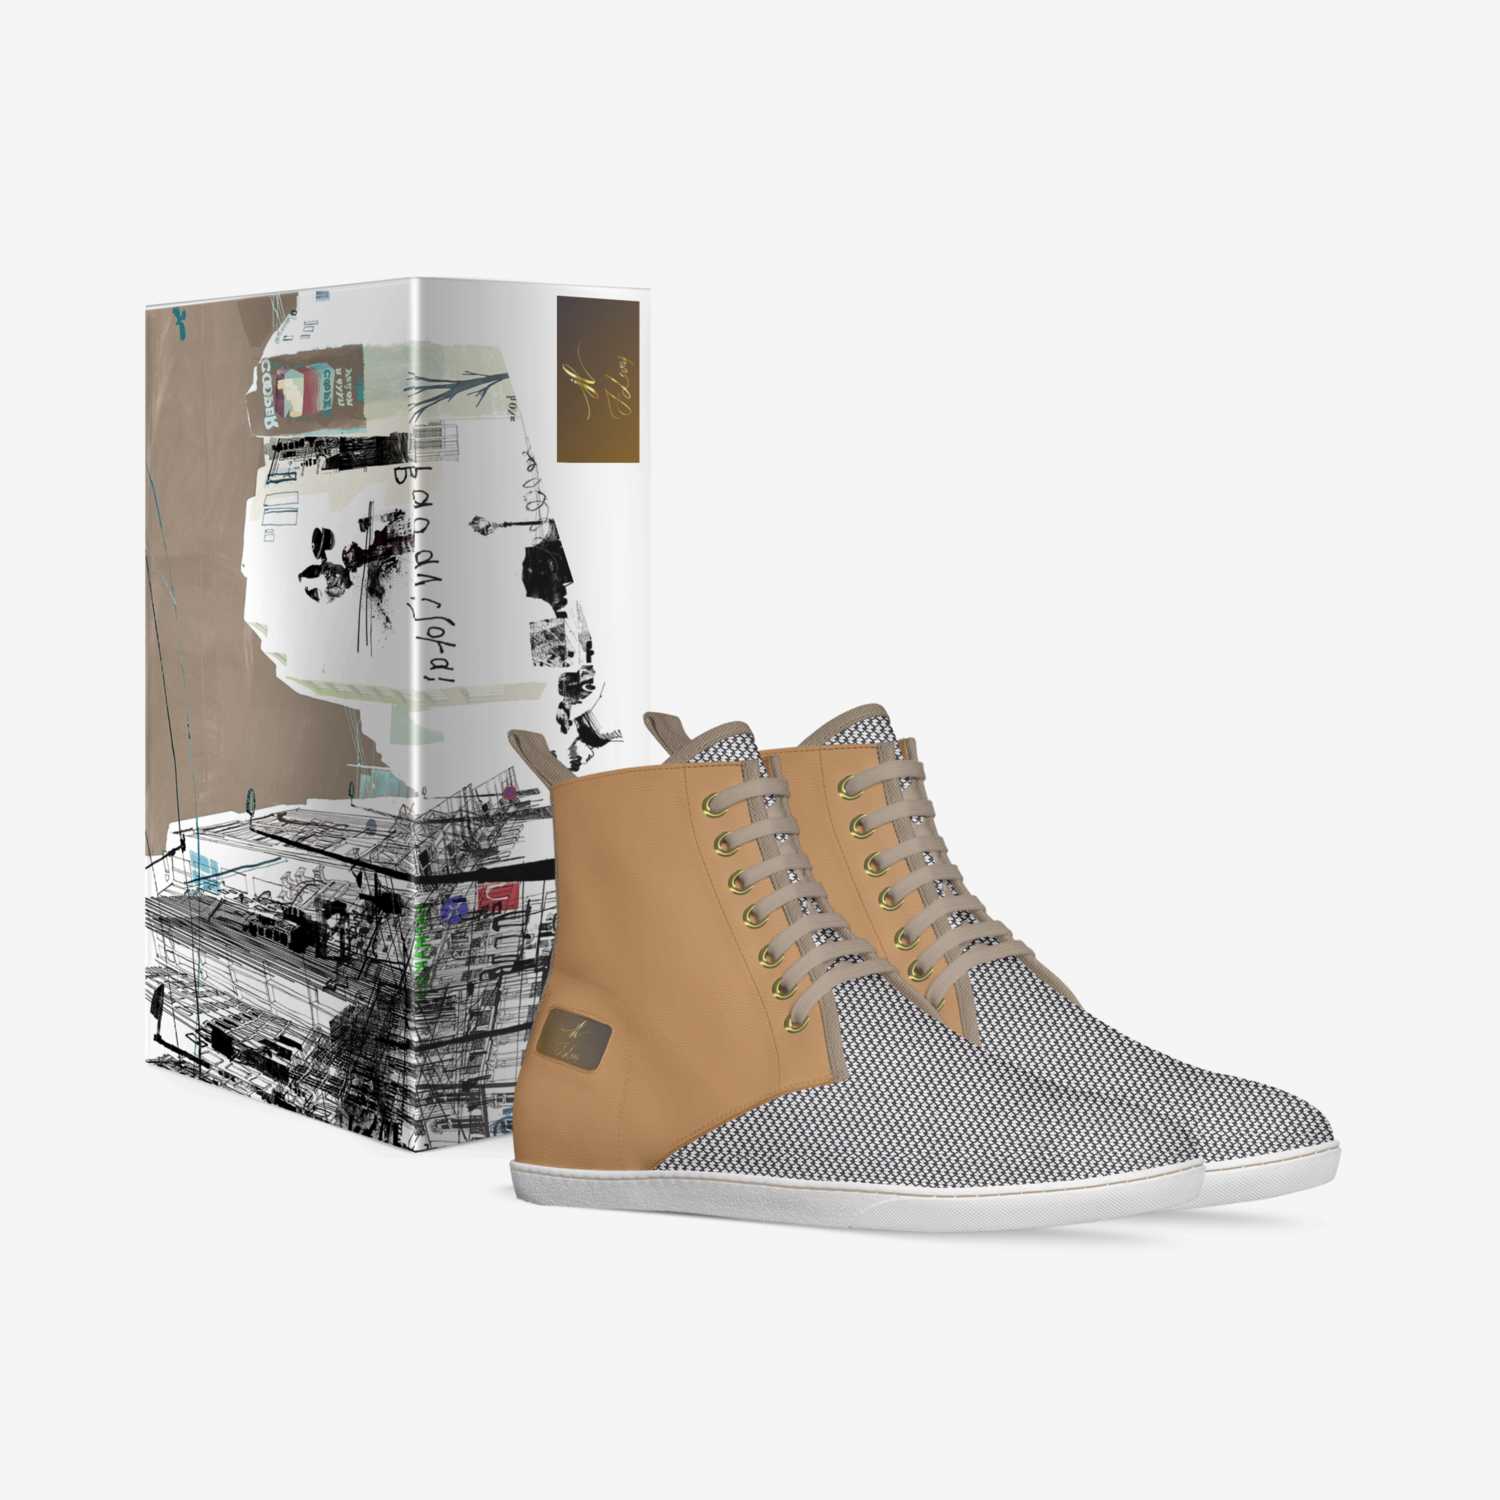 Jontte Levaj custom made in Italy shoes by Jontte Levaj | Box view